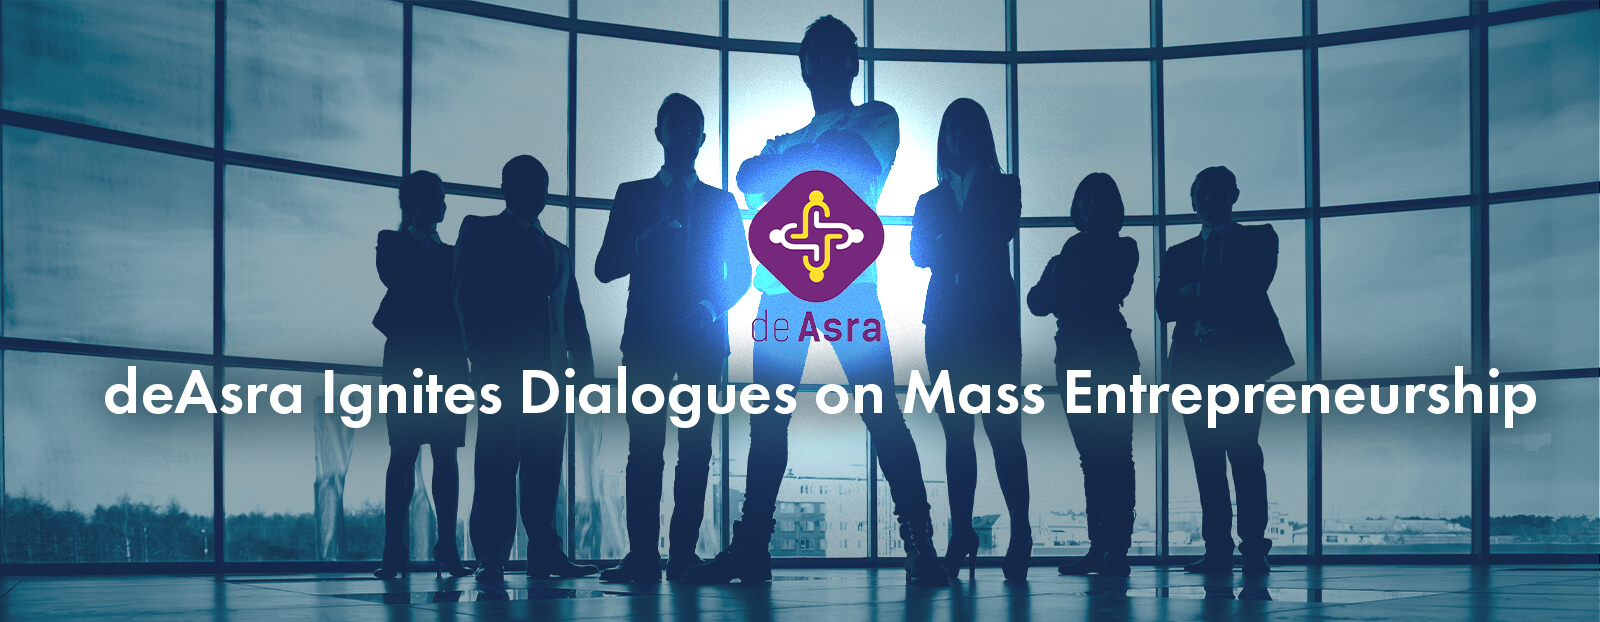 deAsra Ignites Dialogues on Mass Entrepreneurship